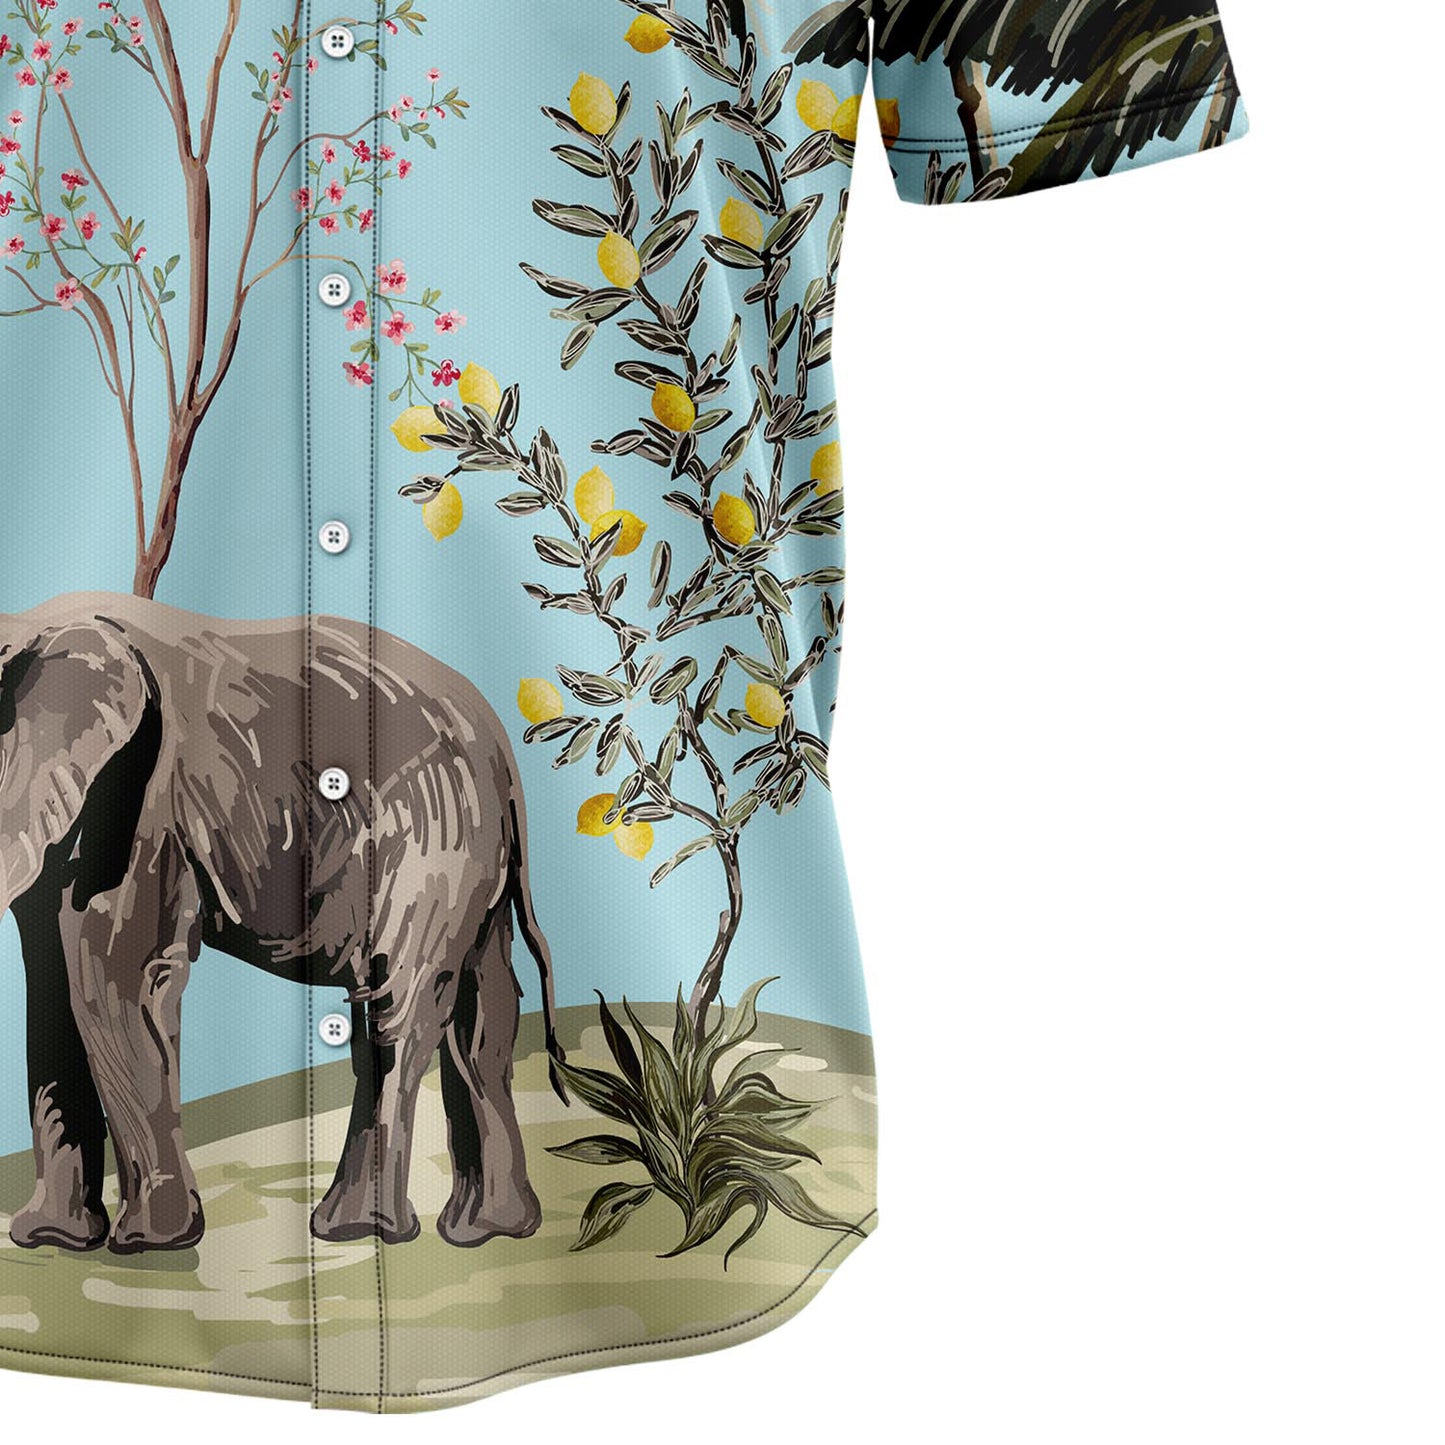 Vintage Tropical Elephant H147016 Hawaiian Shirt